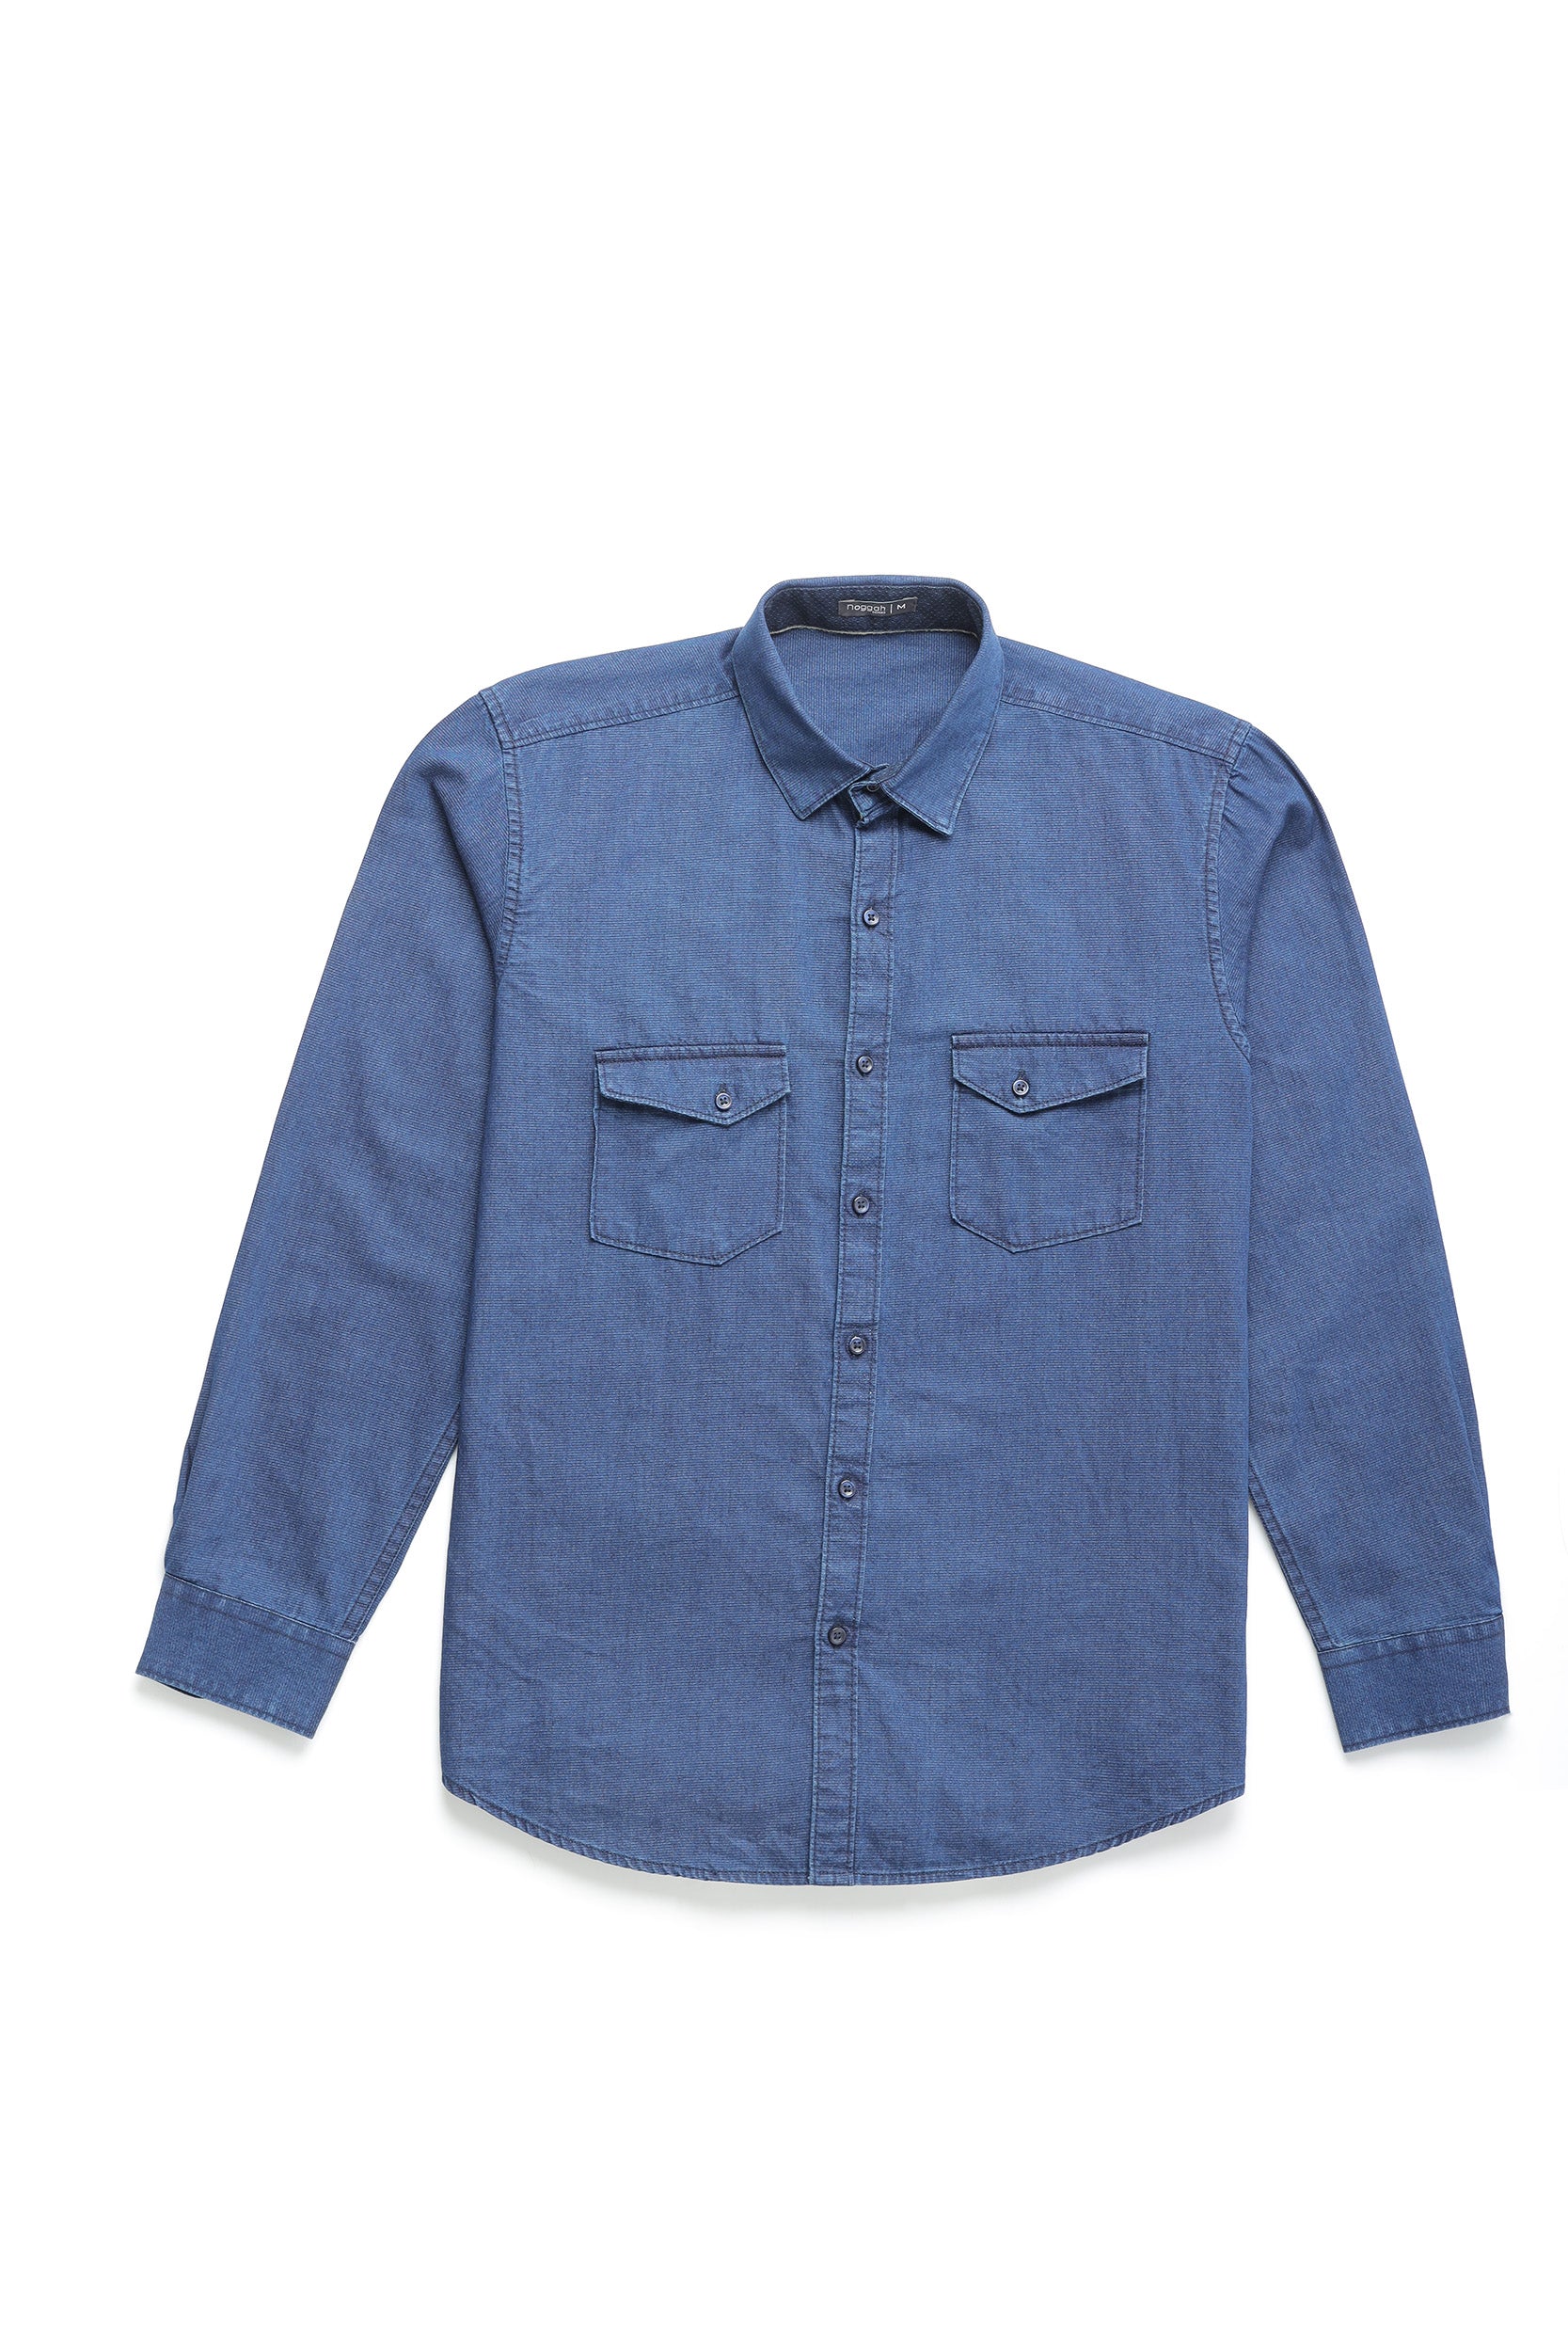 New Look denim shirt in mid blue | ASOS